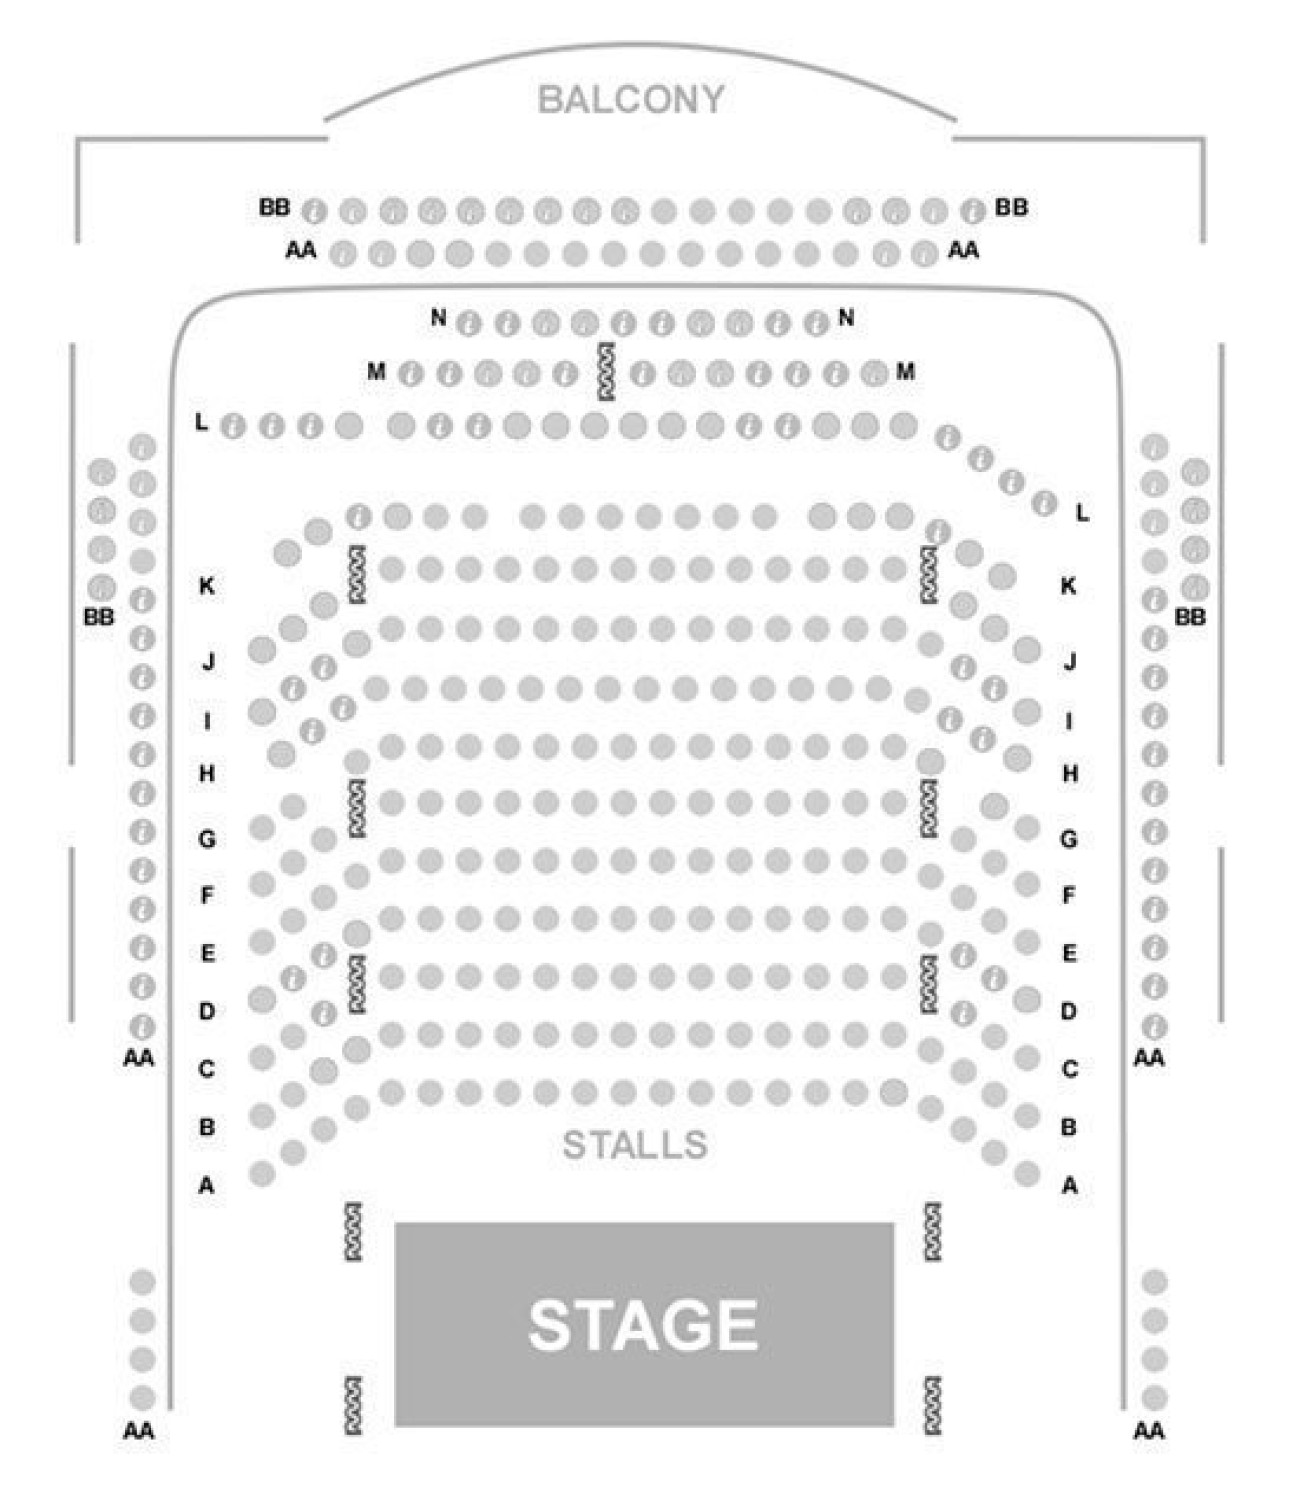 Wilton's Music Hall Seating plan